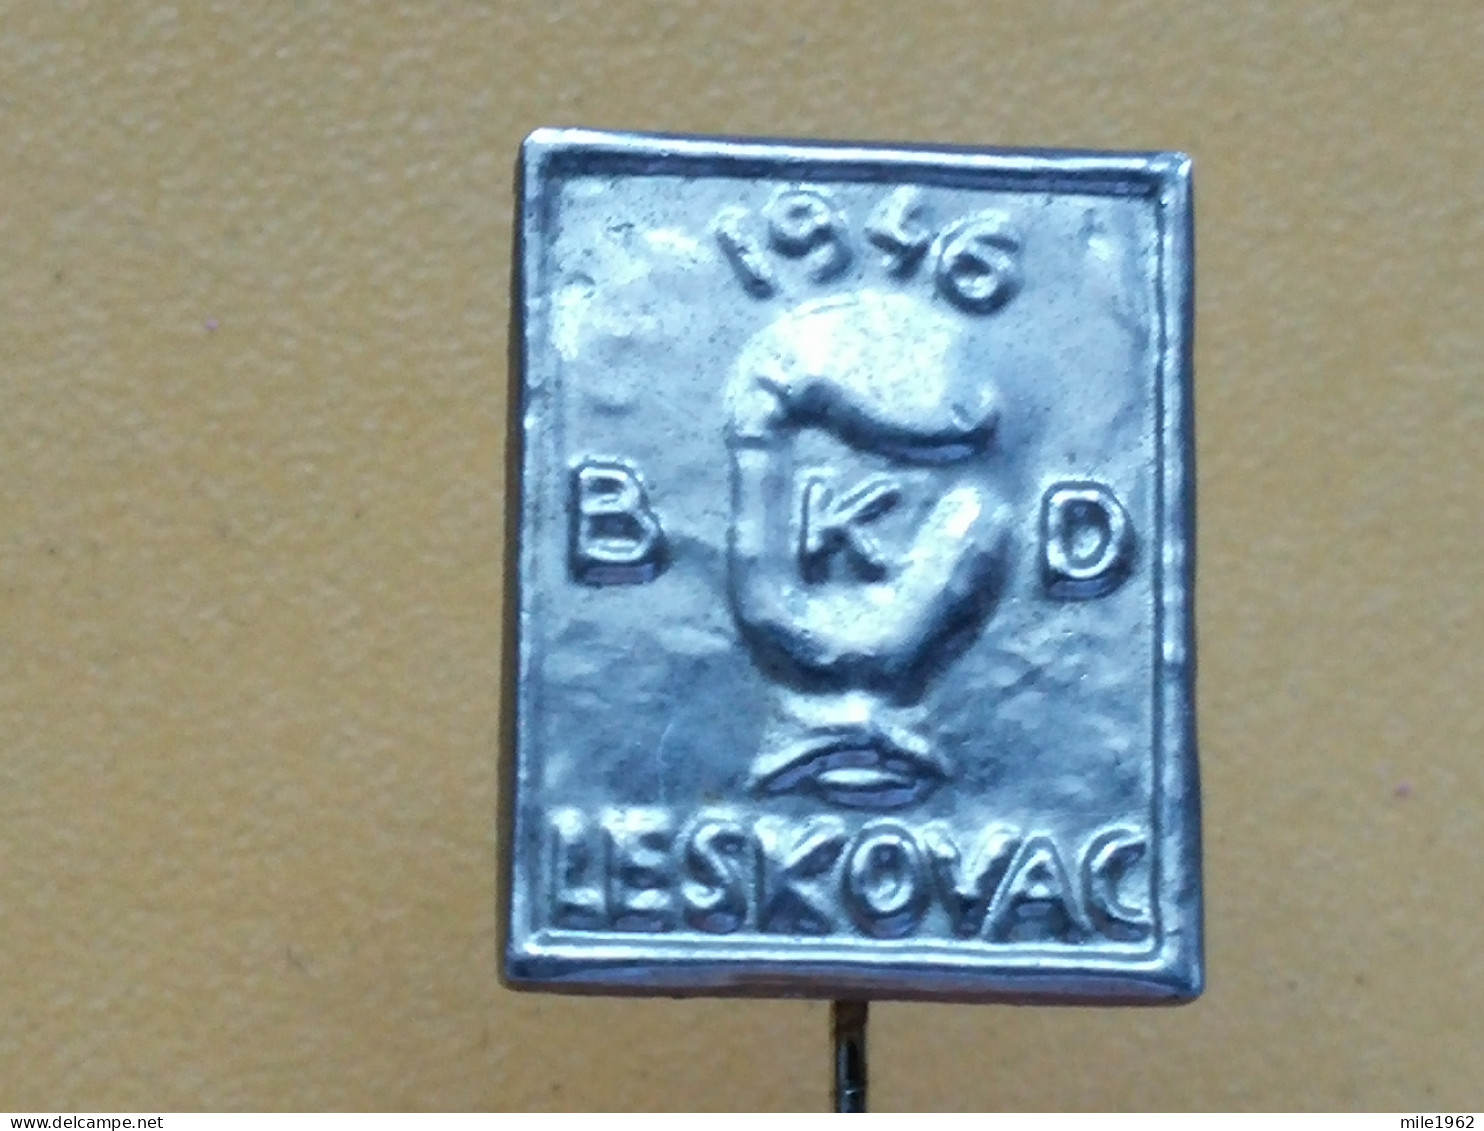 Badge Z-52-1 - BOX, BOXE, BOXING CLUB LESKOVAC, SERBIA - Boksen